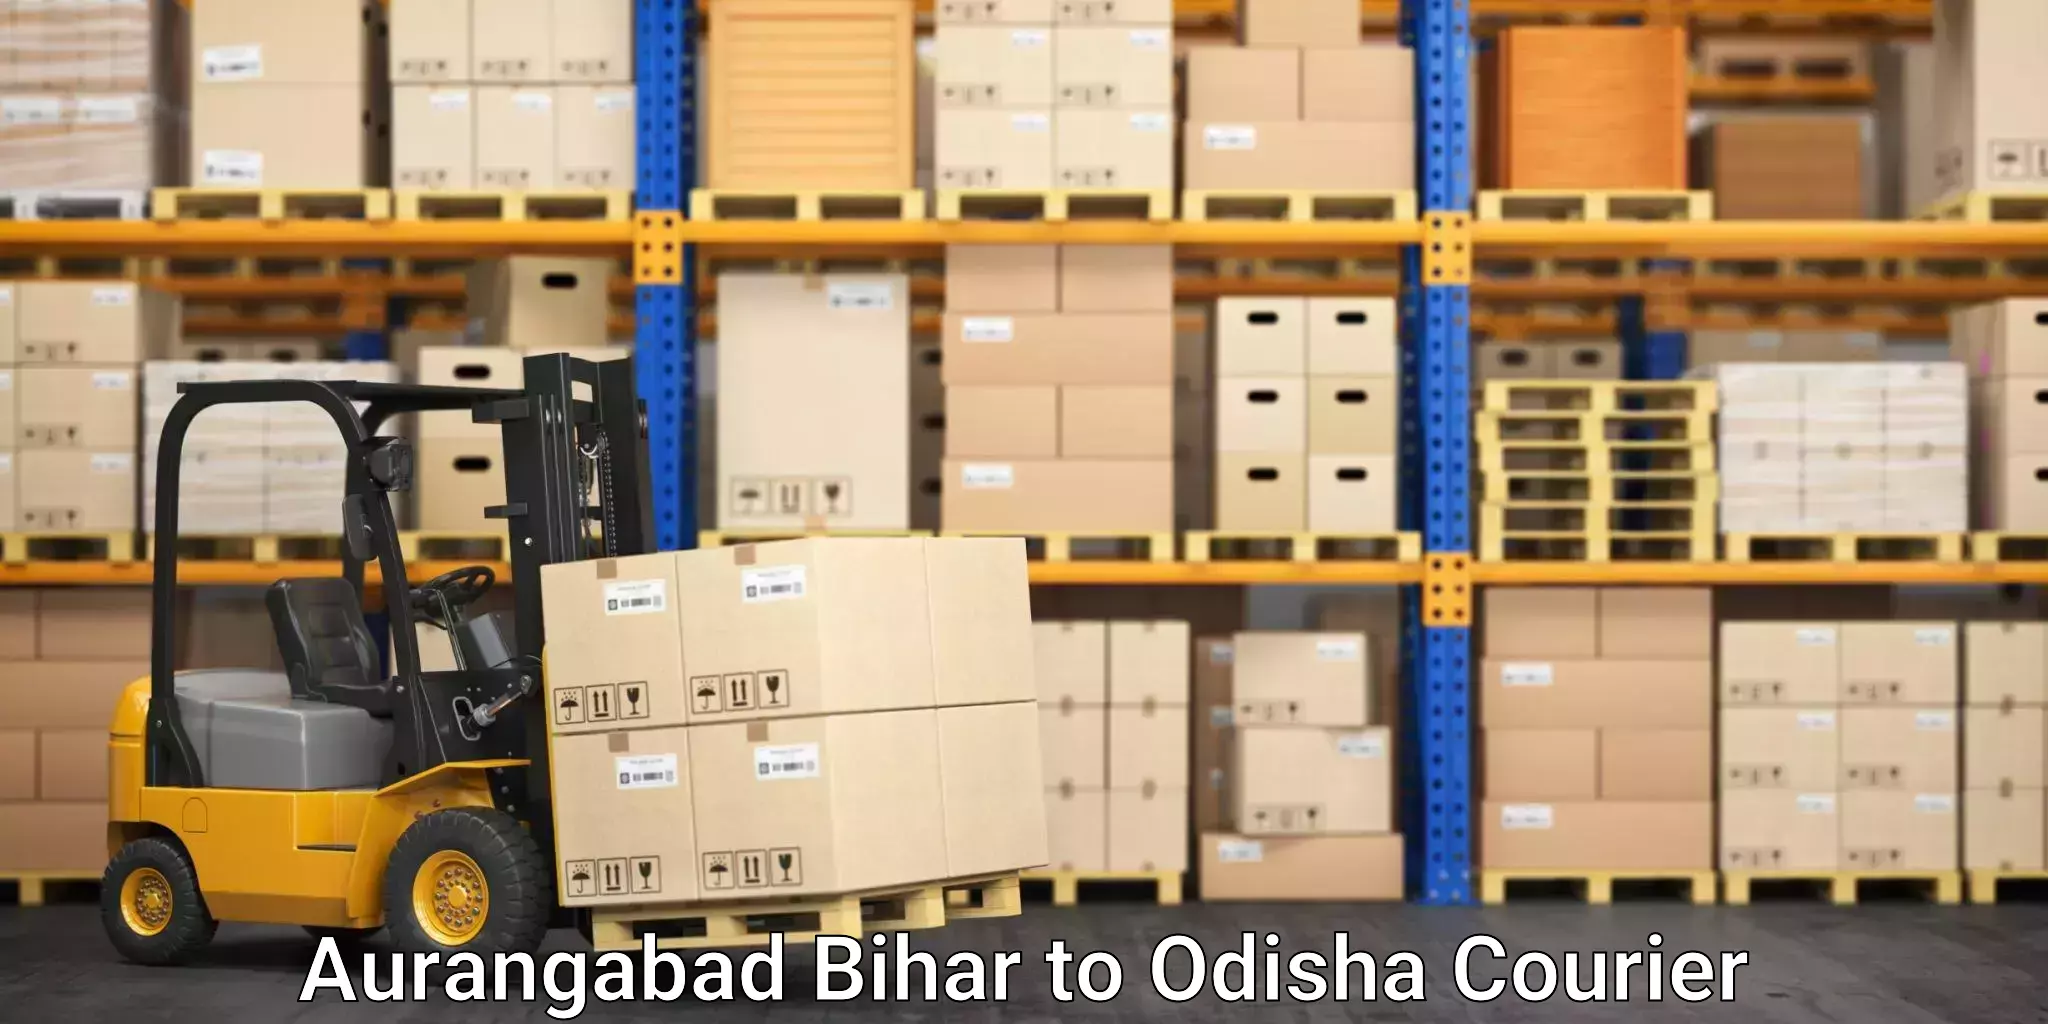 Furniture moving specialists in Aurangabad Bihar to Paradip Port